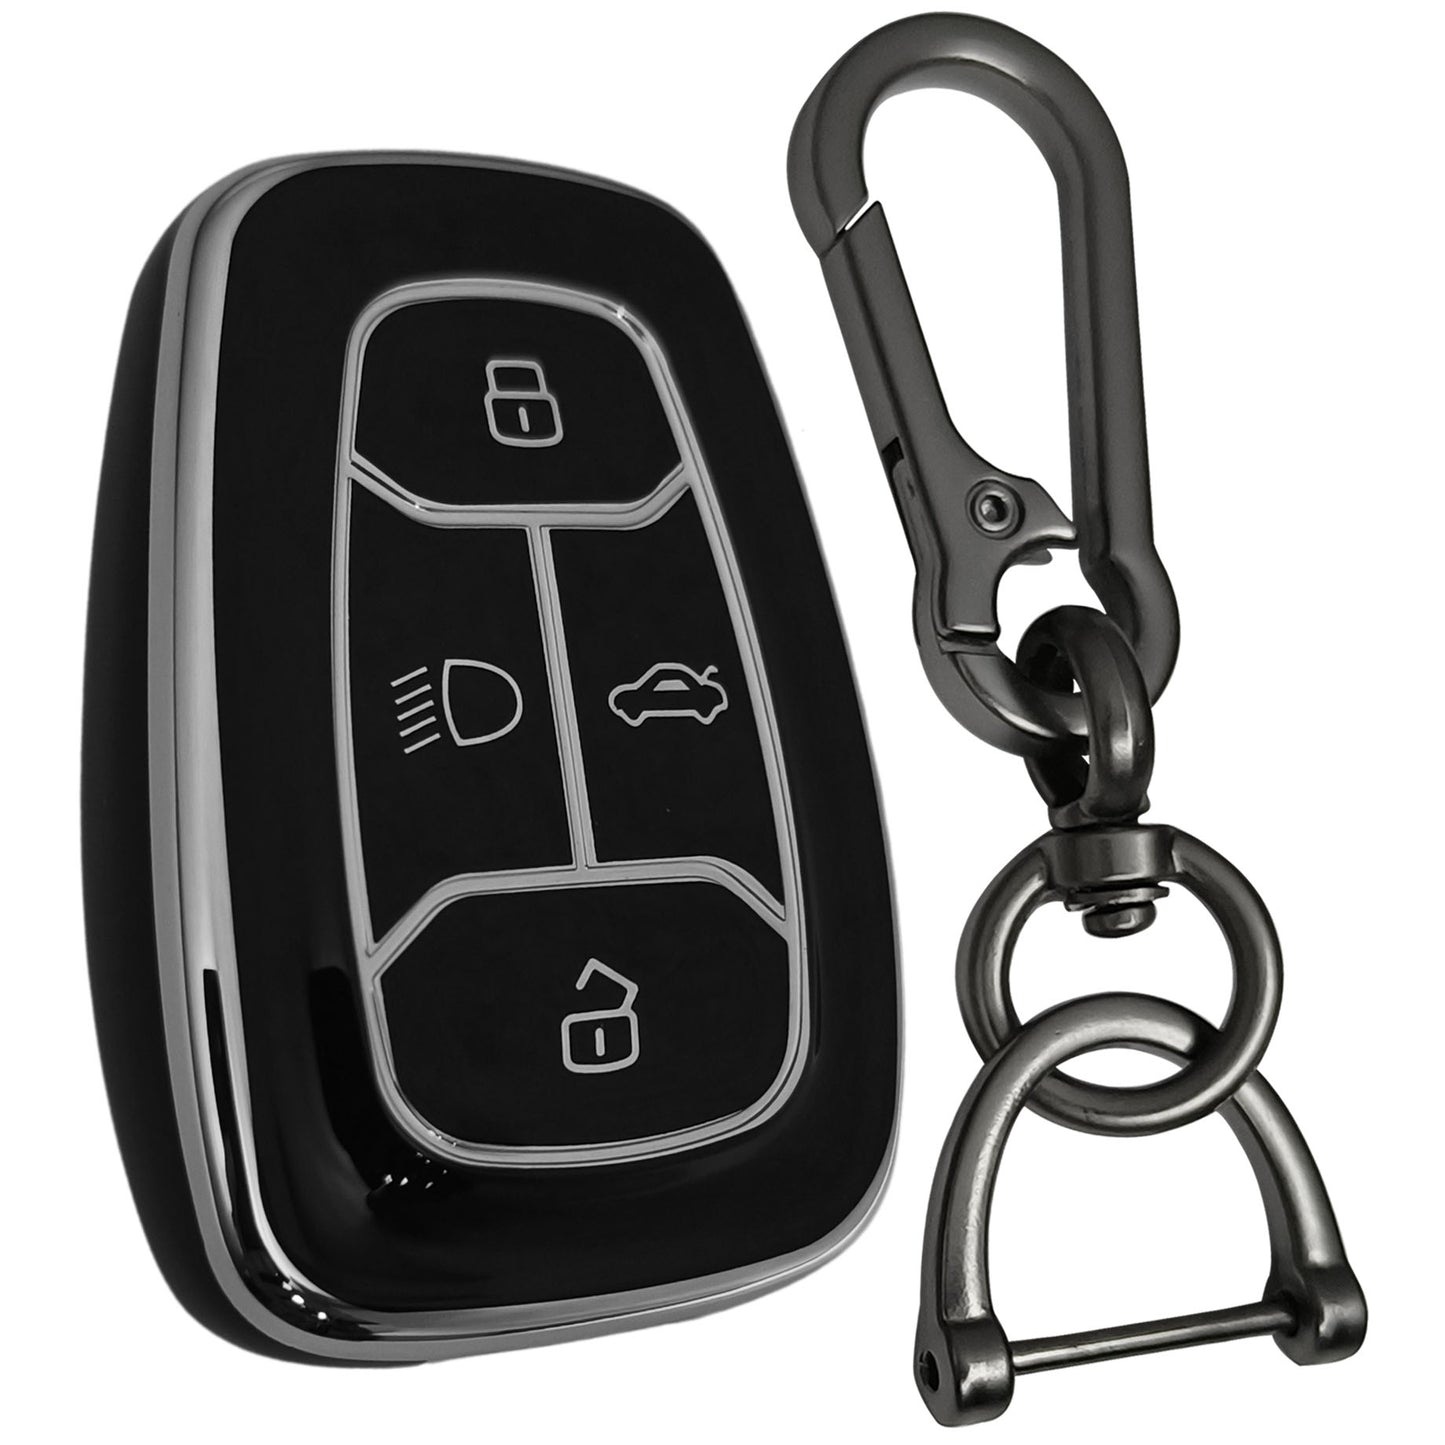 tata nexon harrier safari punch altroz tpu cover black silver  key case accessories keychain